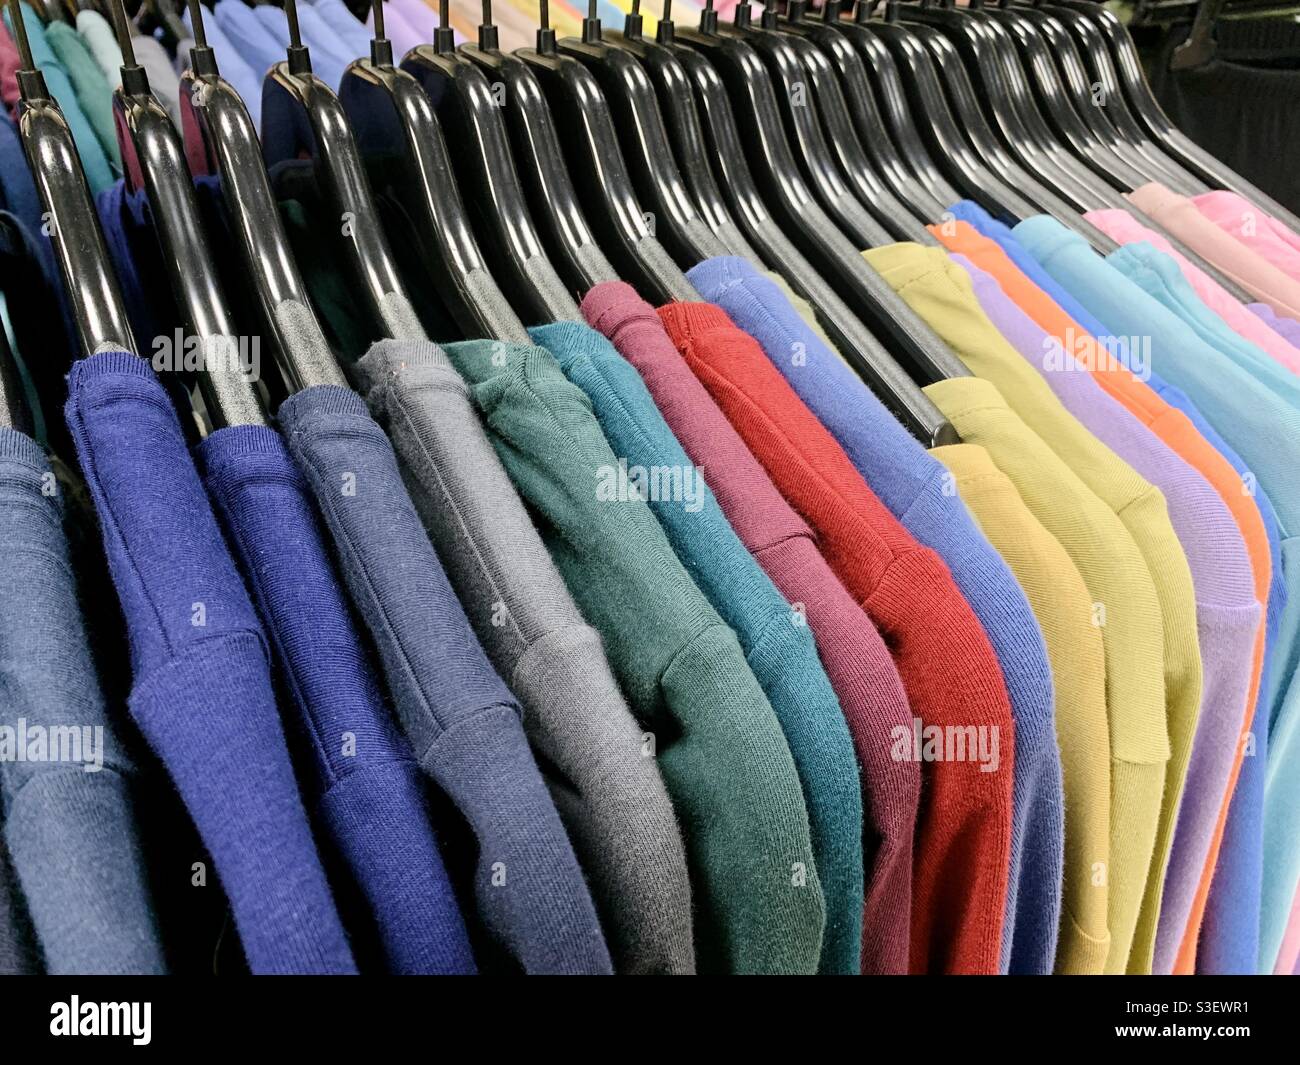 Colorful clothing hanging on hanger rack Stock Photo - Alamy